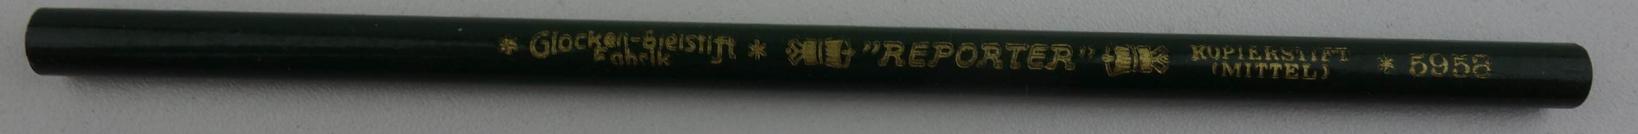 Original WWII German pencil